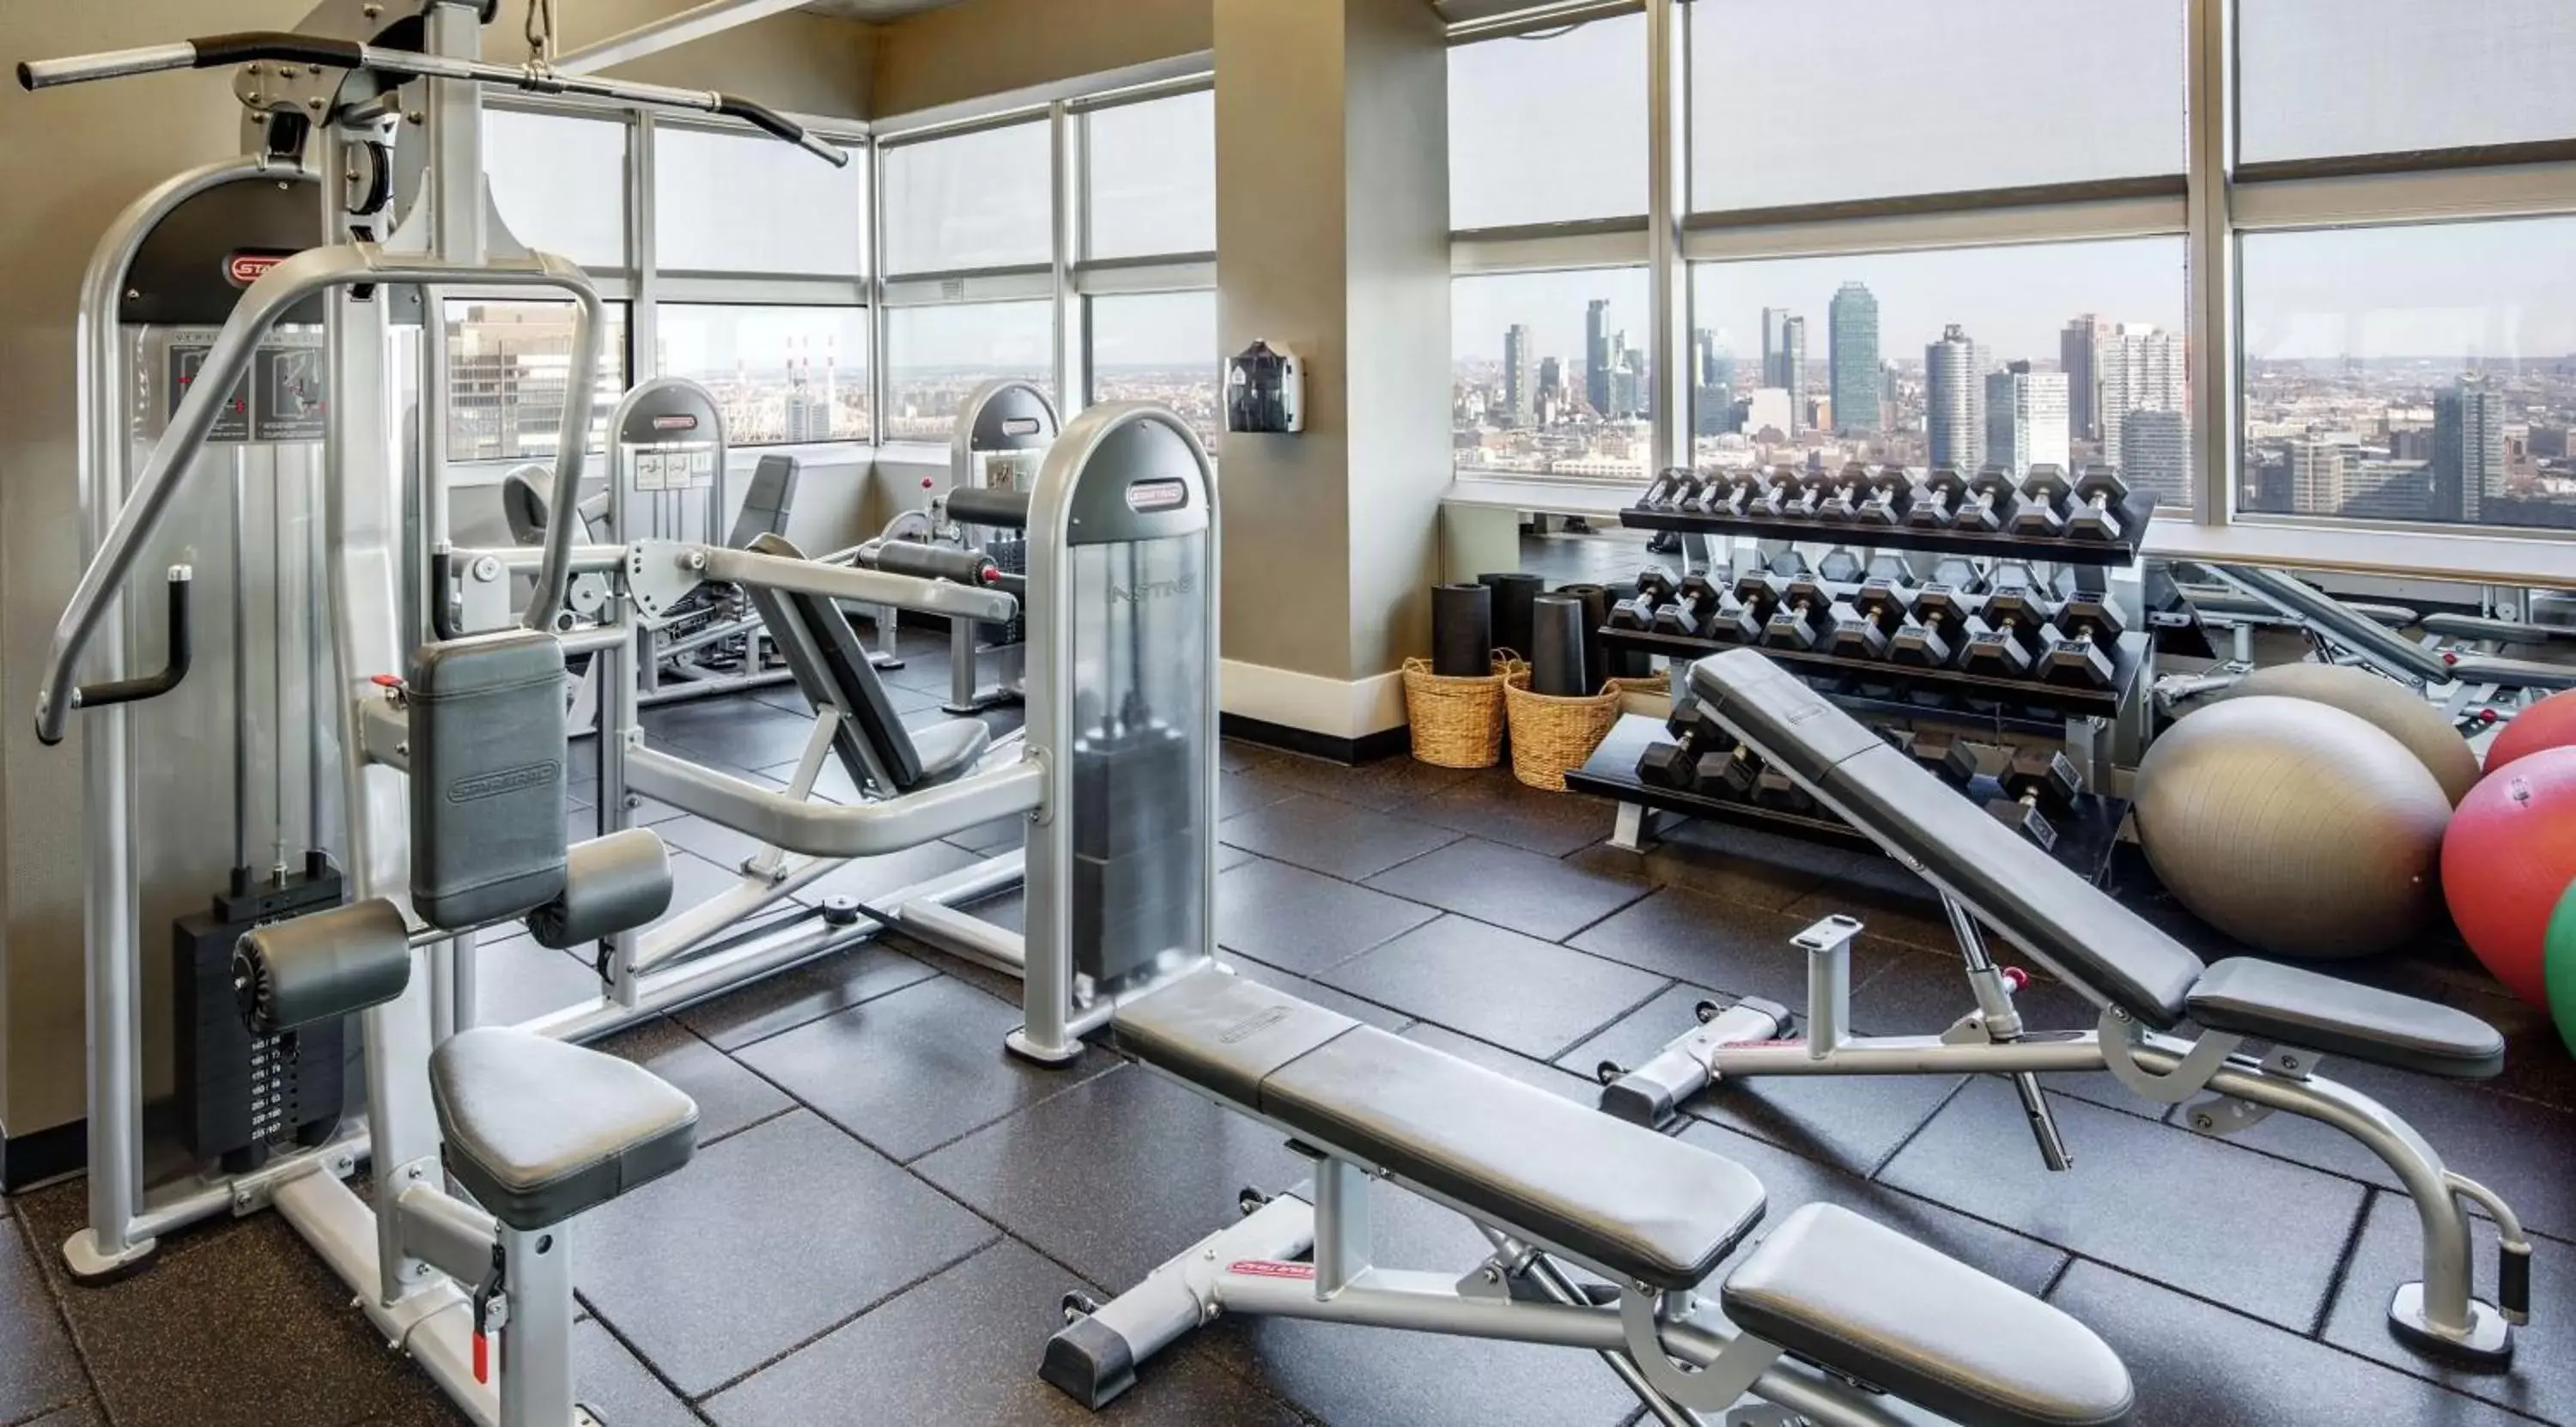 Fitness centre/facilities, Fitness Center/Facilities in Millennium Hilton New York One UN Plaza